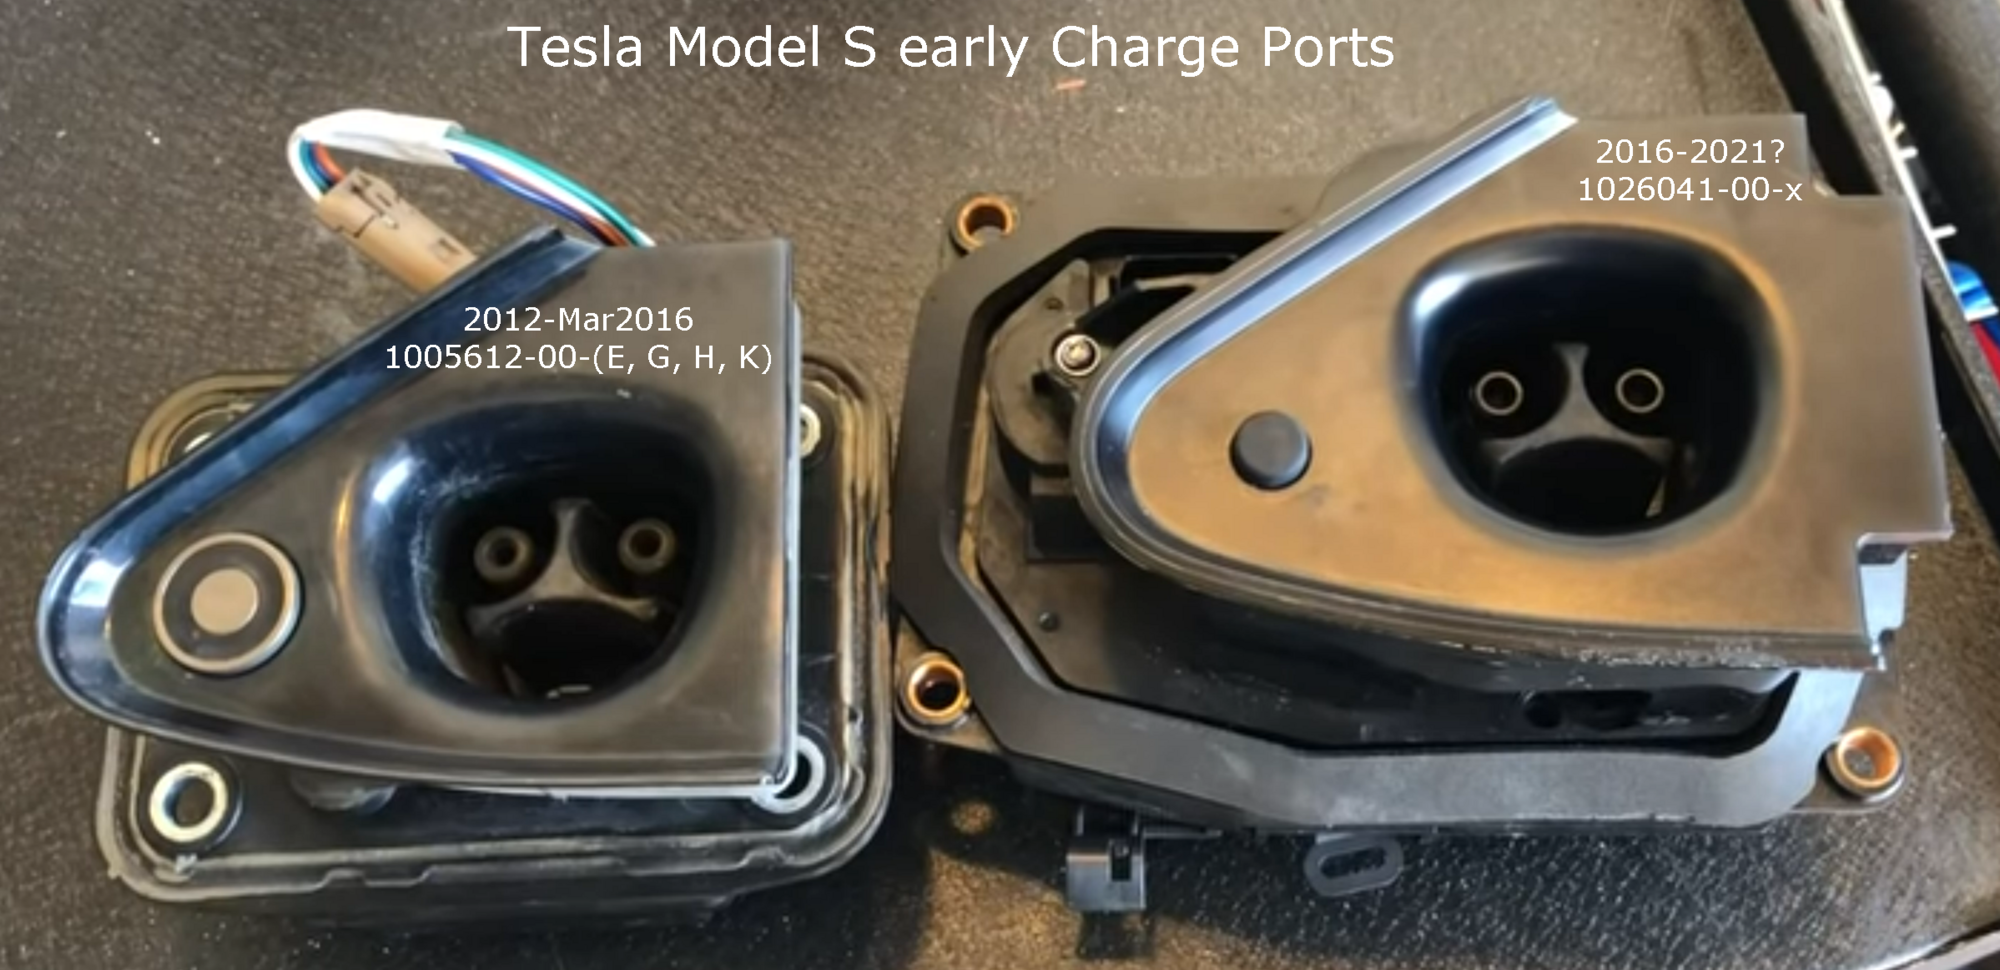 Tesla_NACS_Charge_Port_Model_S_Comparison_01b.png